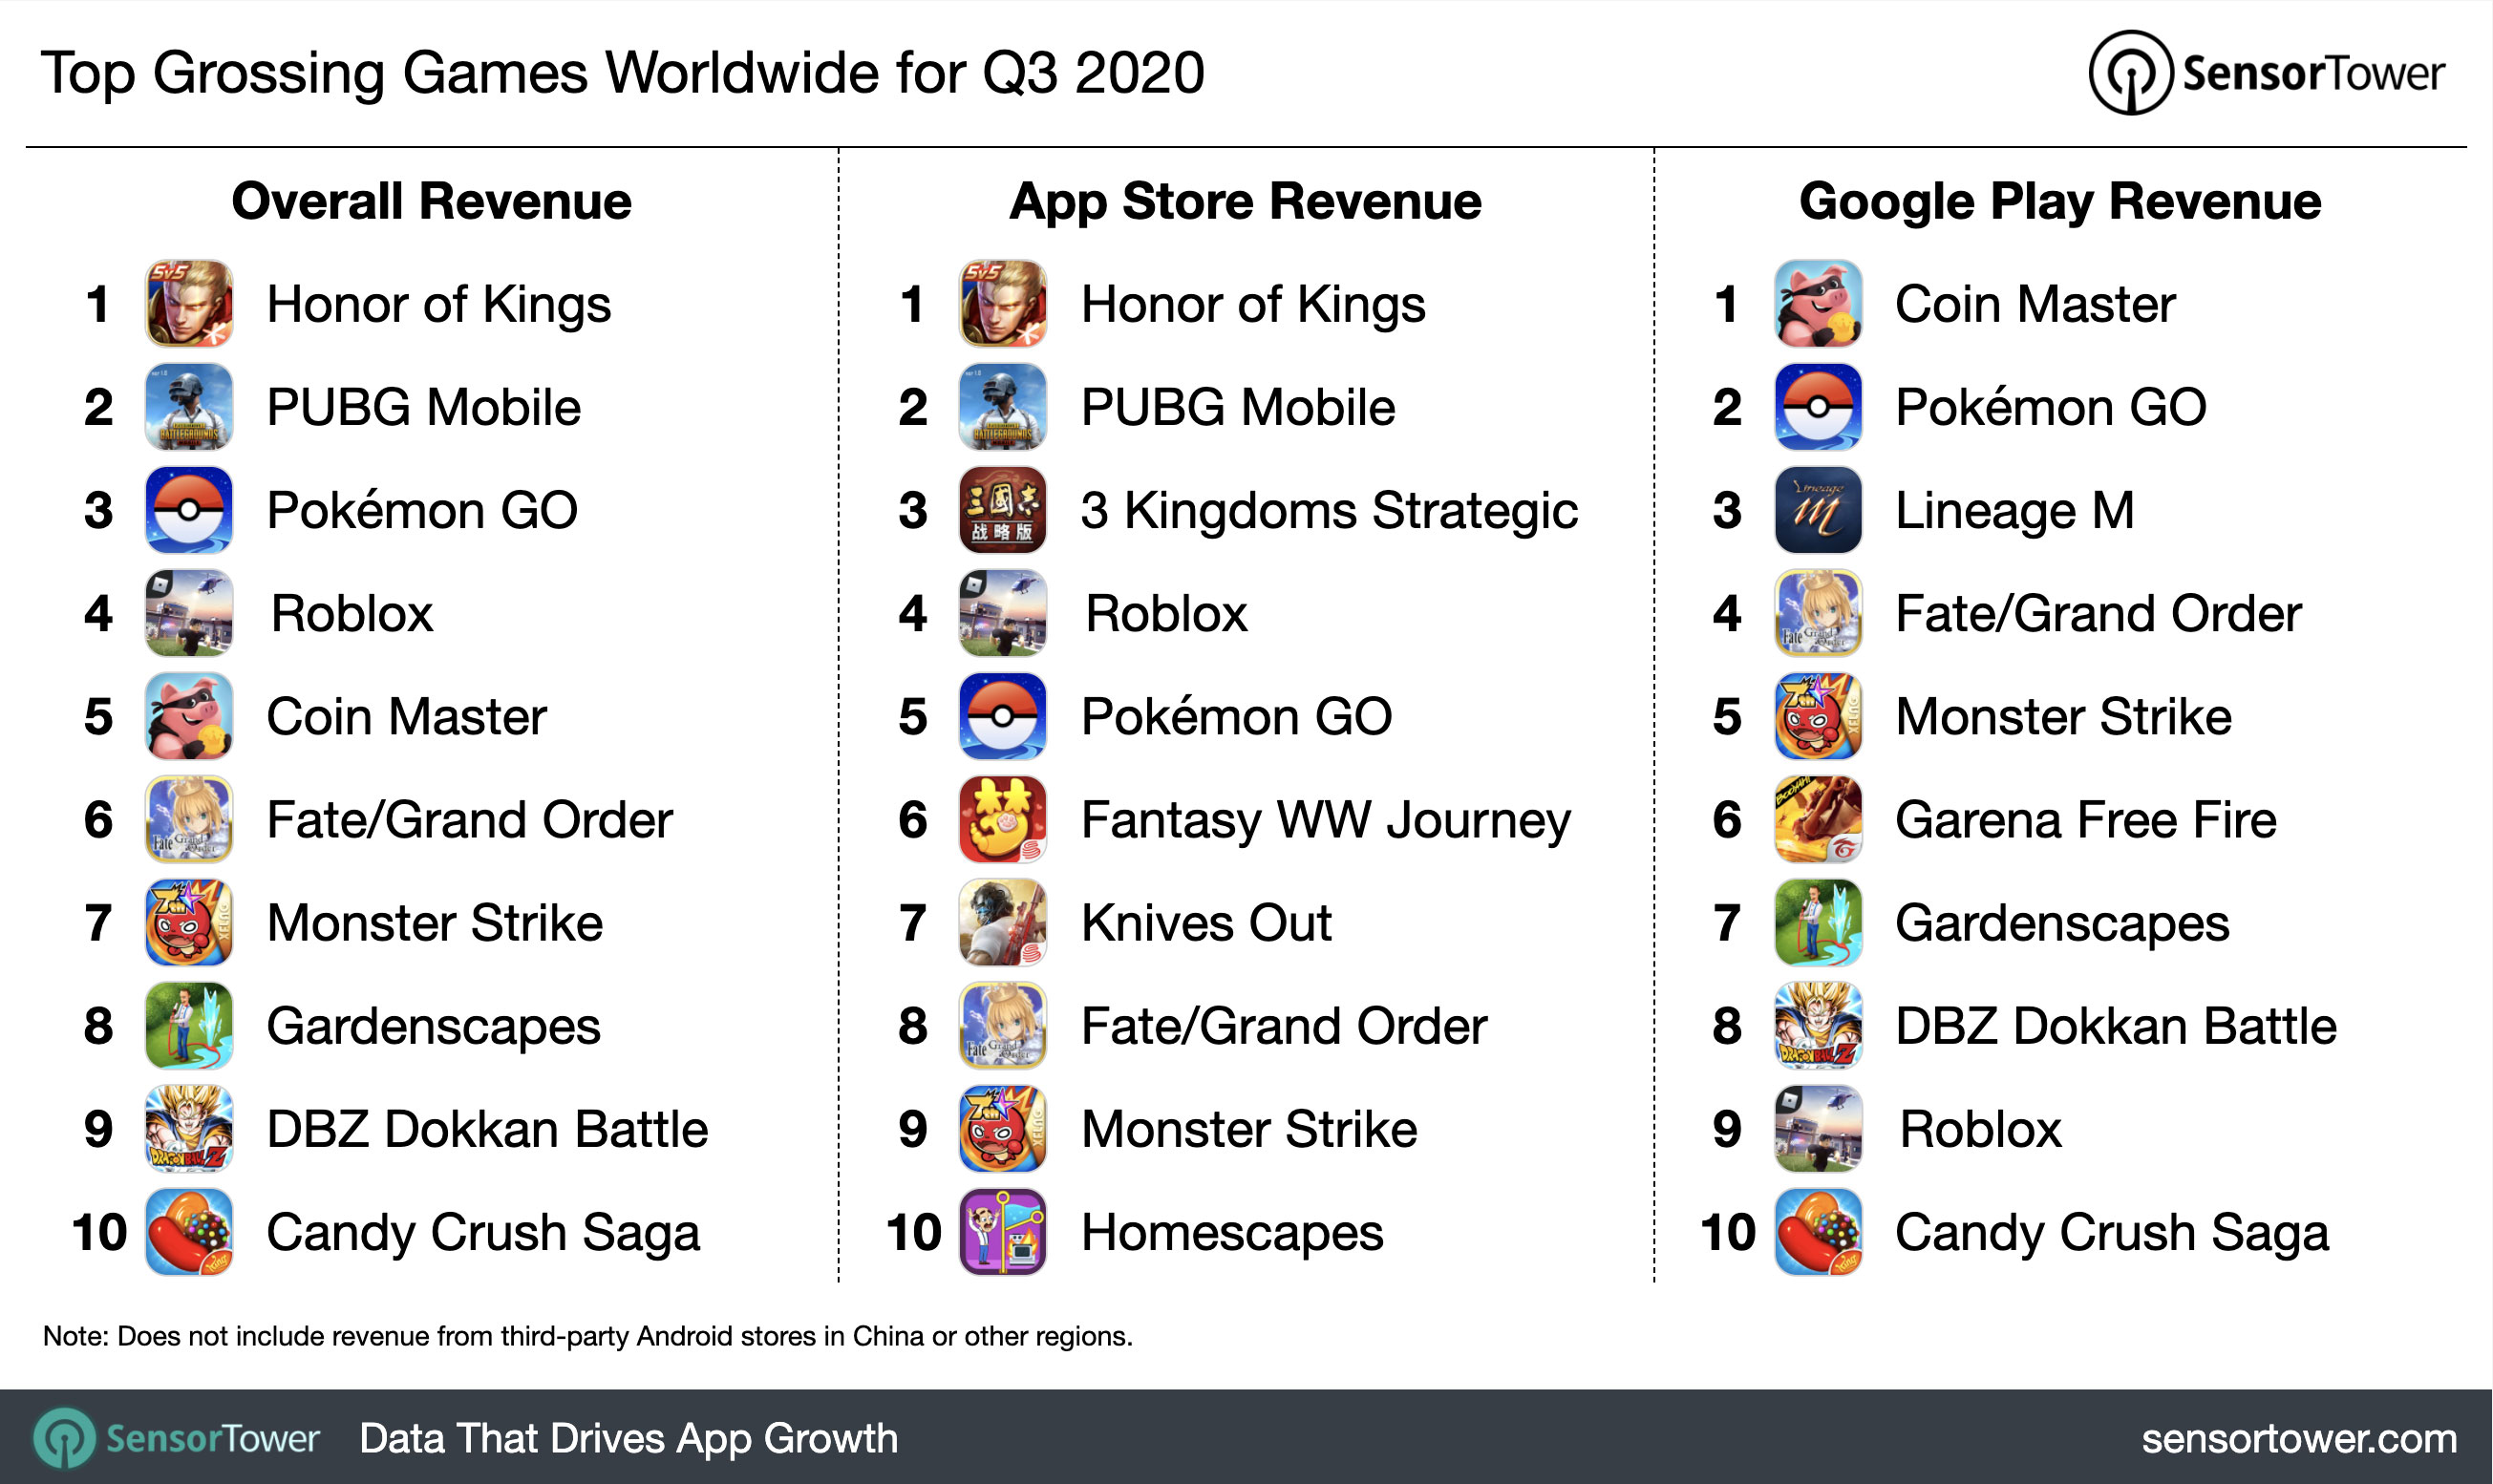 Q3 2020 Top Grossing Games Worldwide